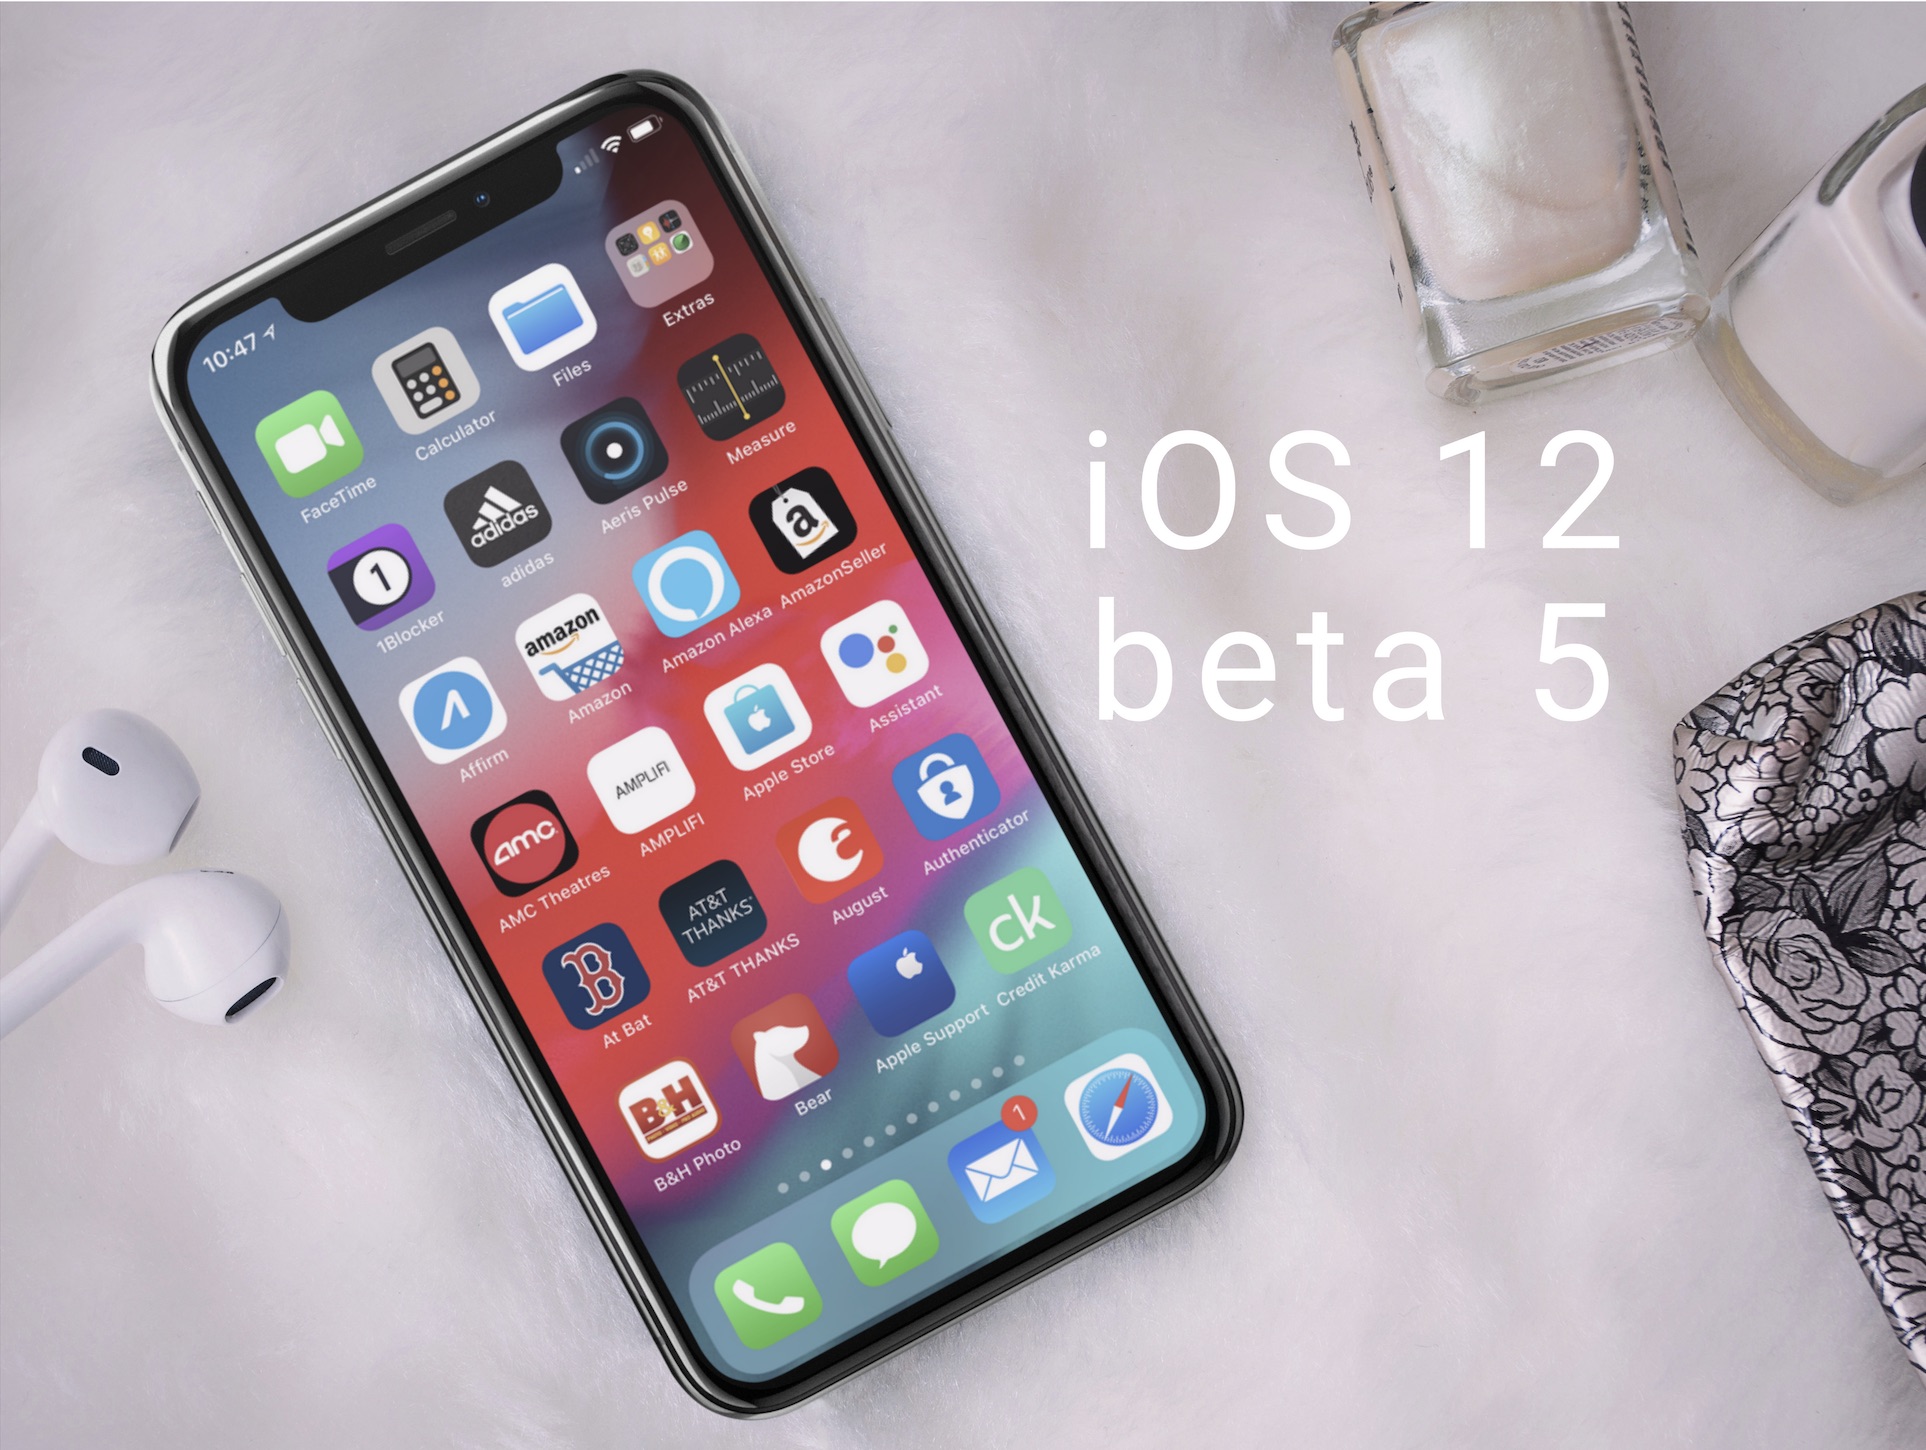 iOS 12 beta 5